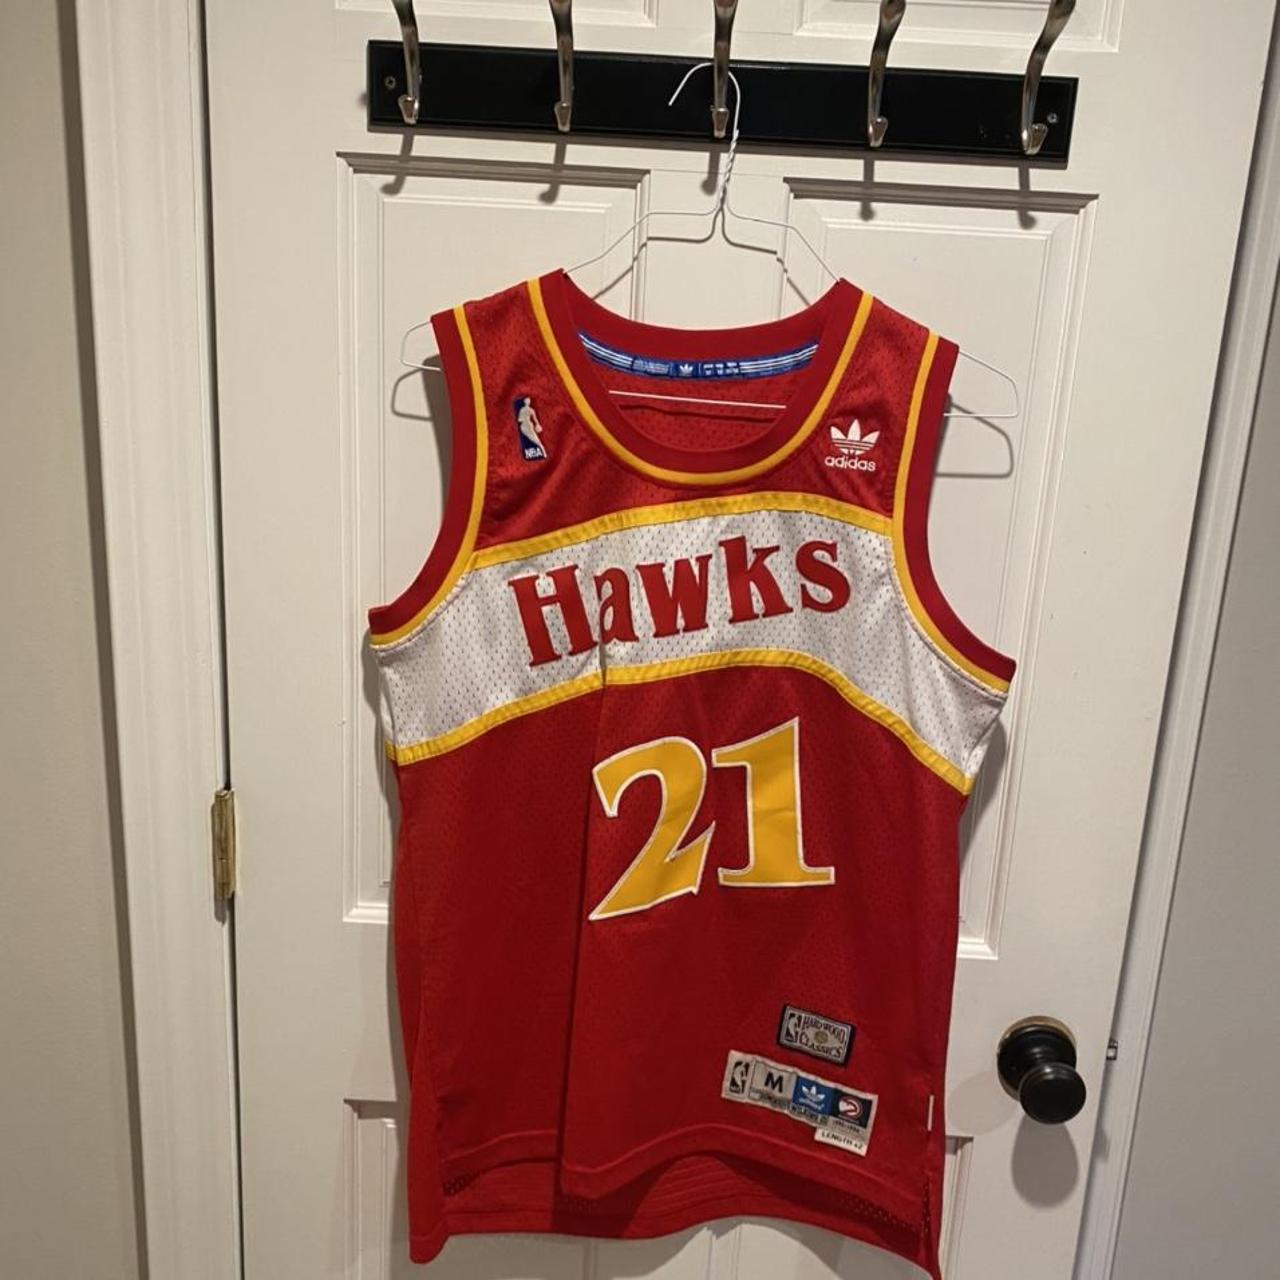 Product Image 1 - Dominique Wilkins jersey
Atlanta Hawks
Size -